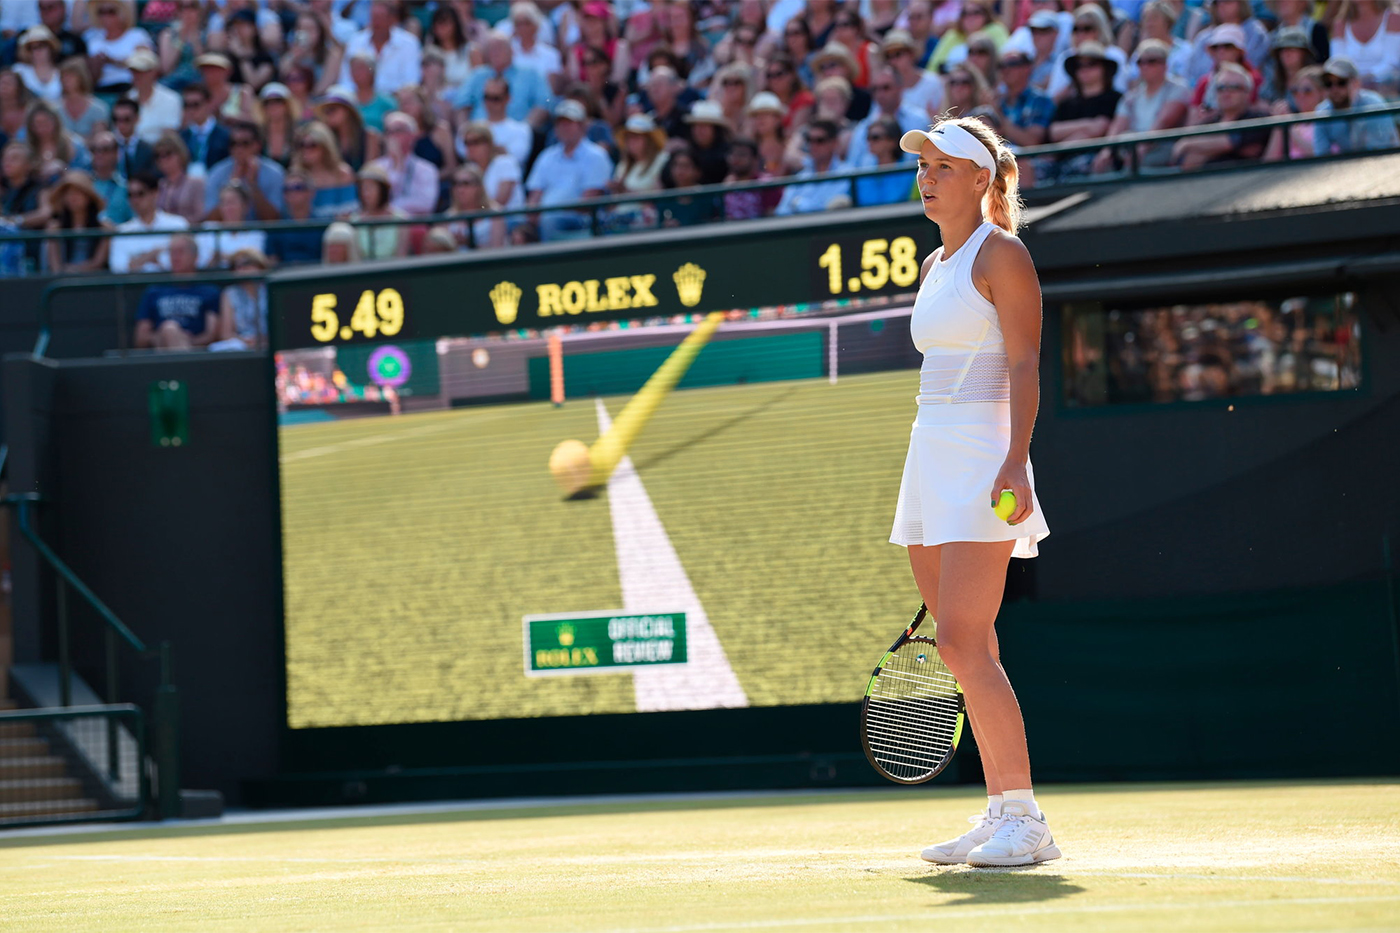 Victory for Wozniacki over Kontaveit - The Championships, Wimbledon ...